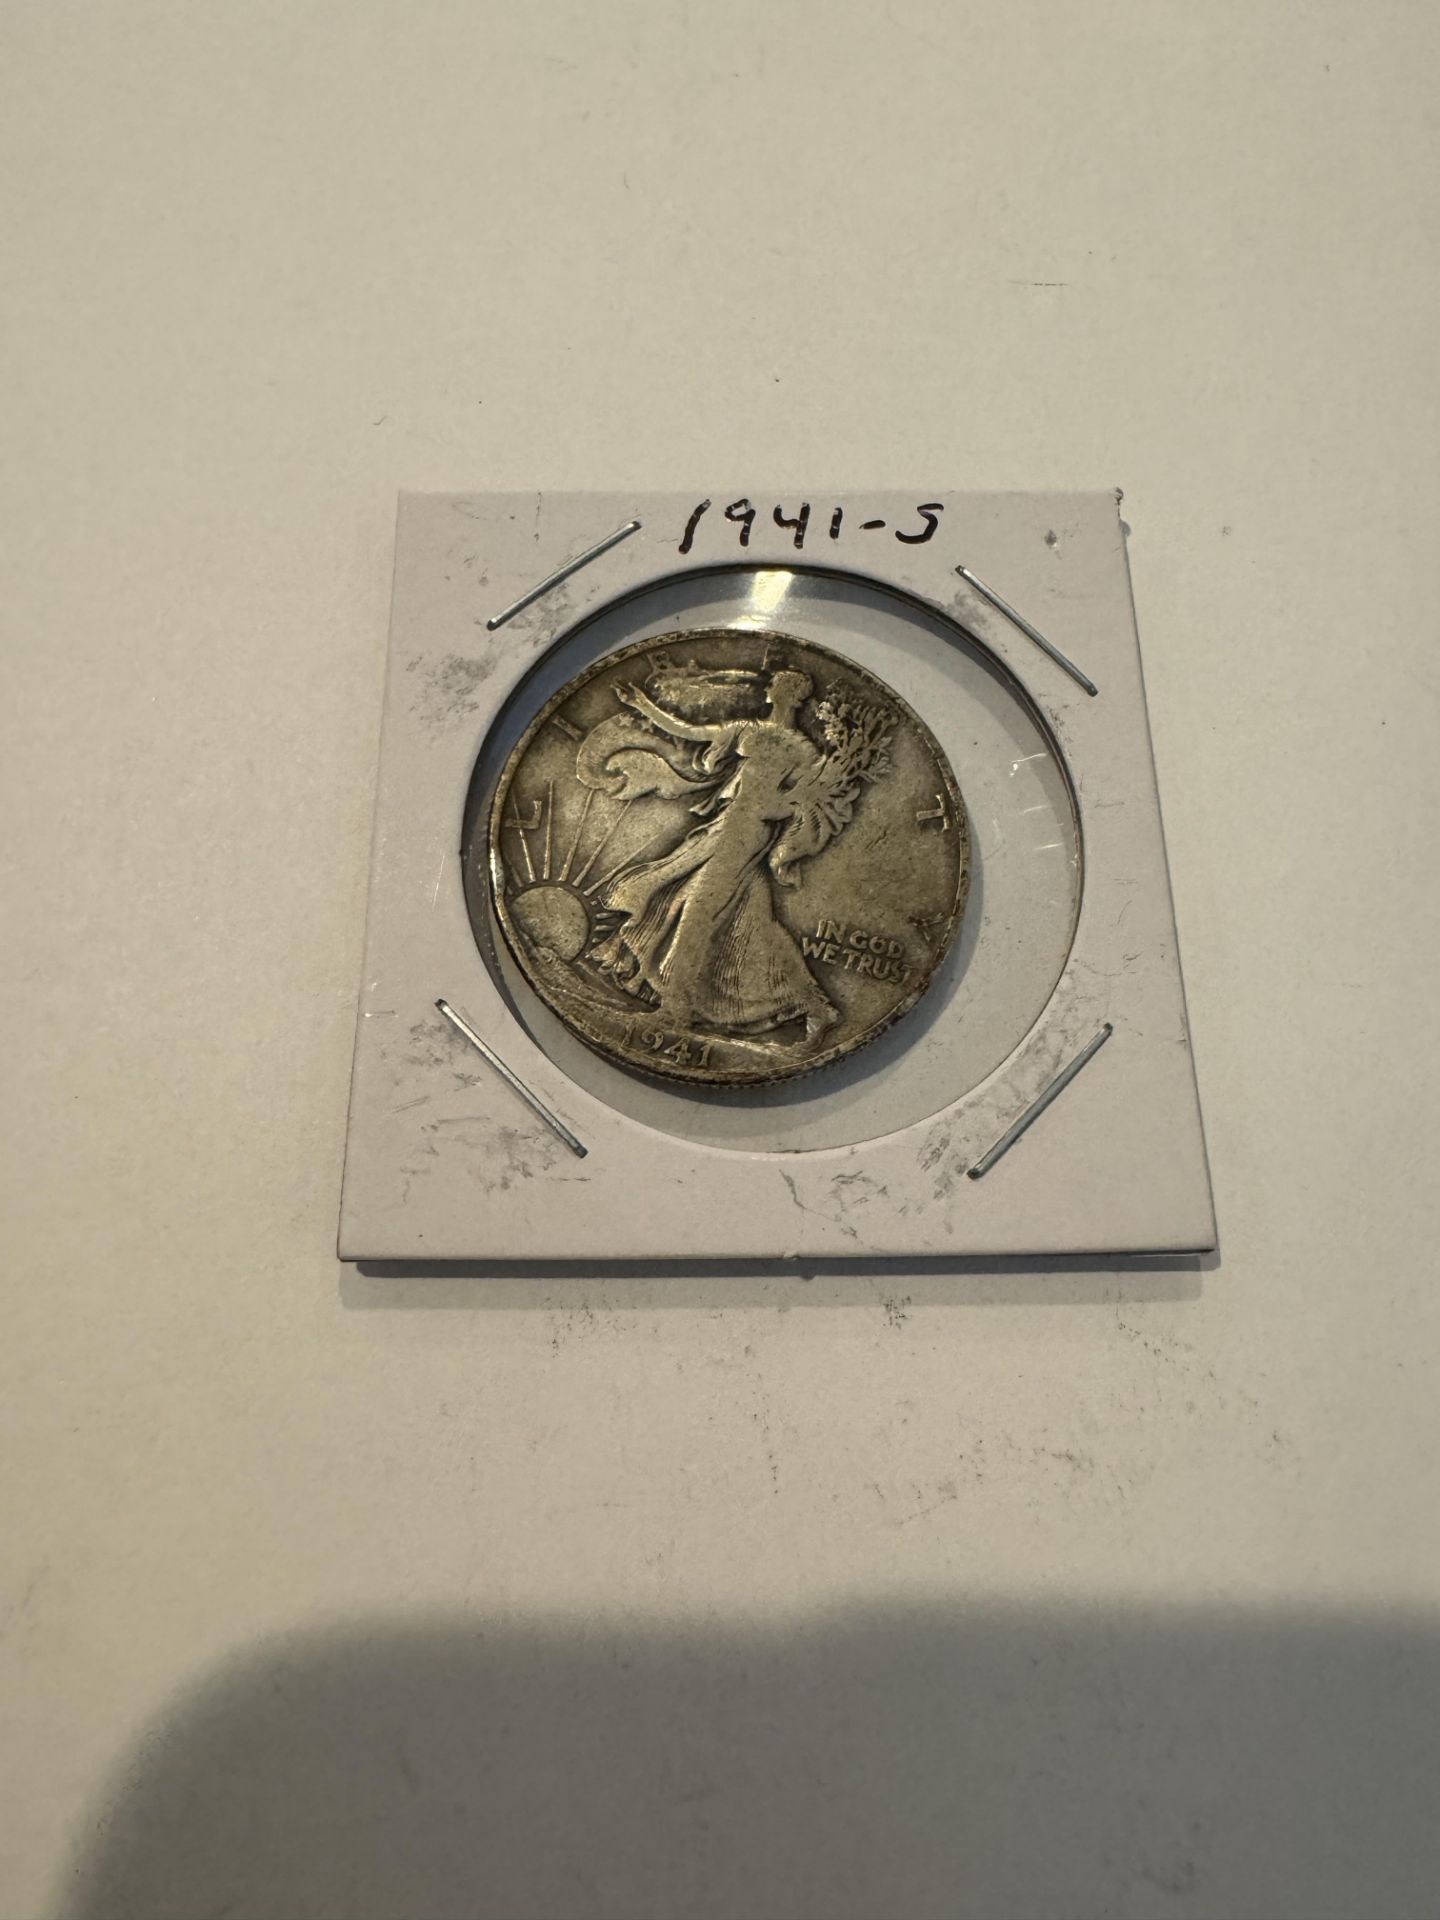 US Half-dollar silver coin 1941